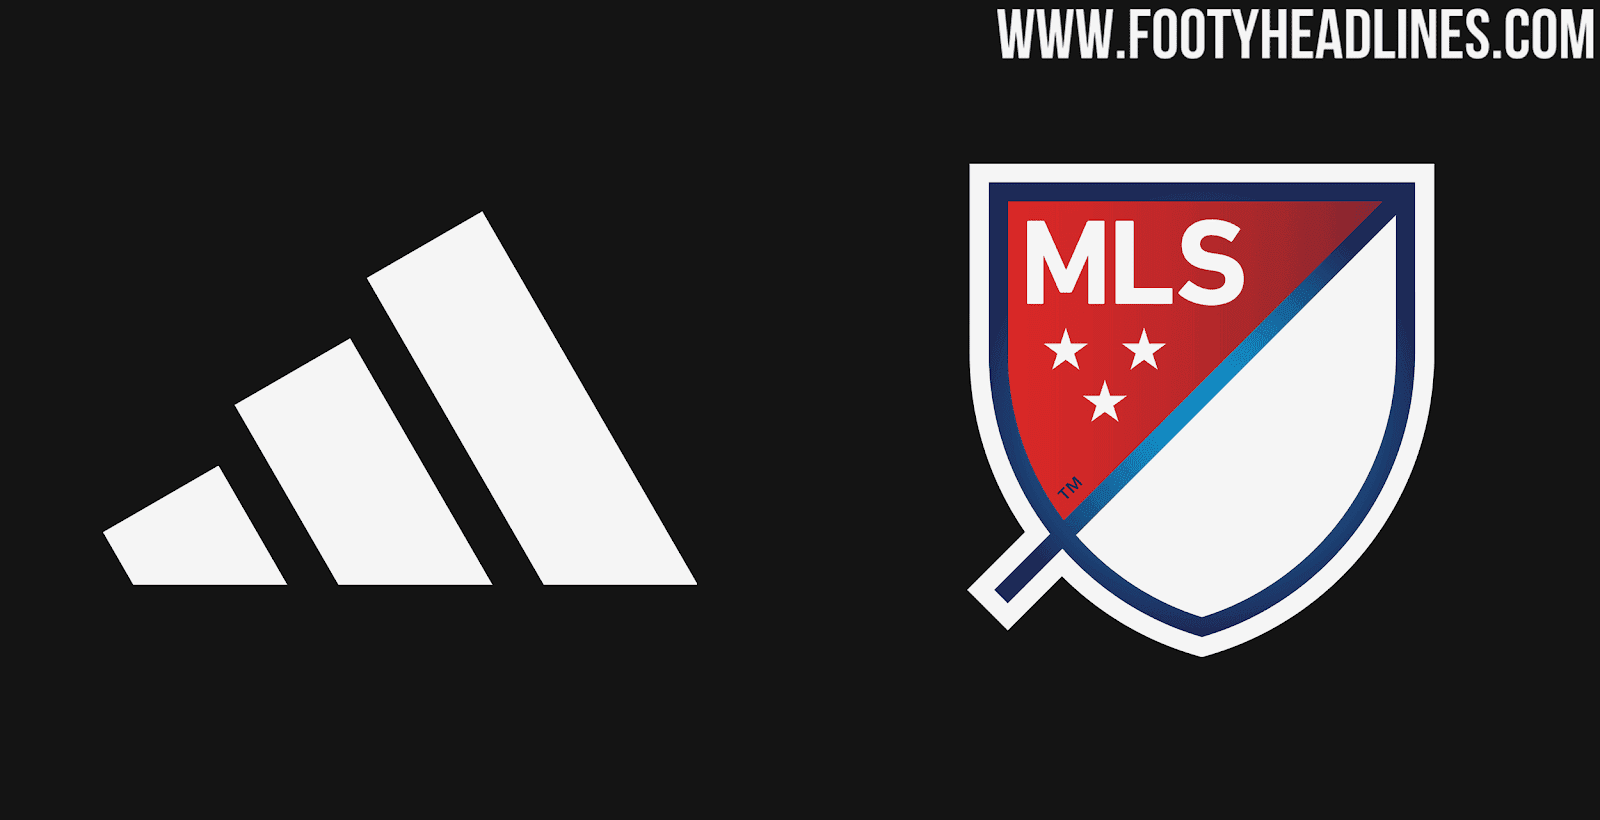 Adidas Extend MLS Deal 2030 - Each Team to Get 3-4 USD/Year? - Footy Headlines